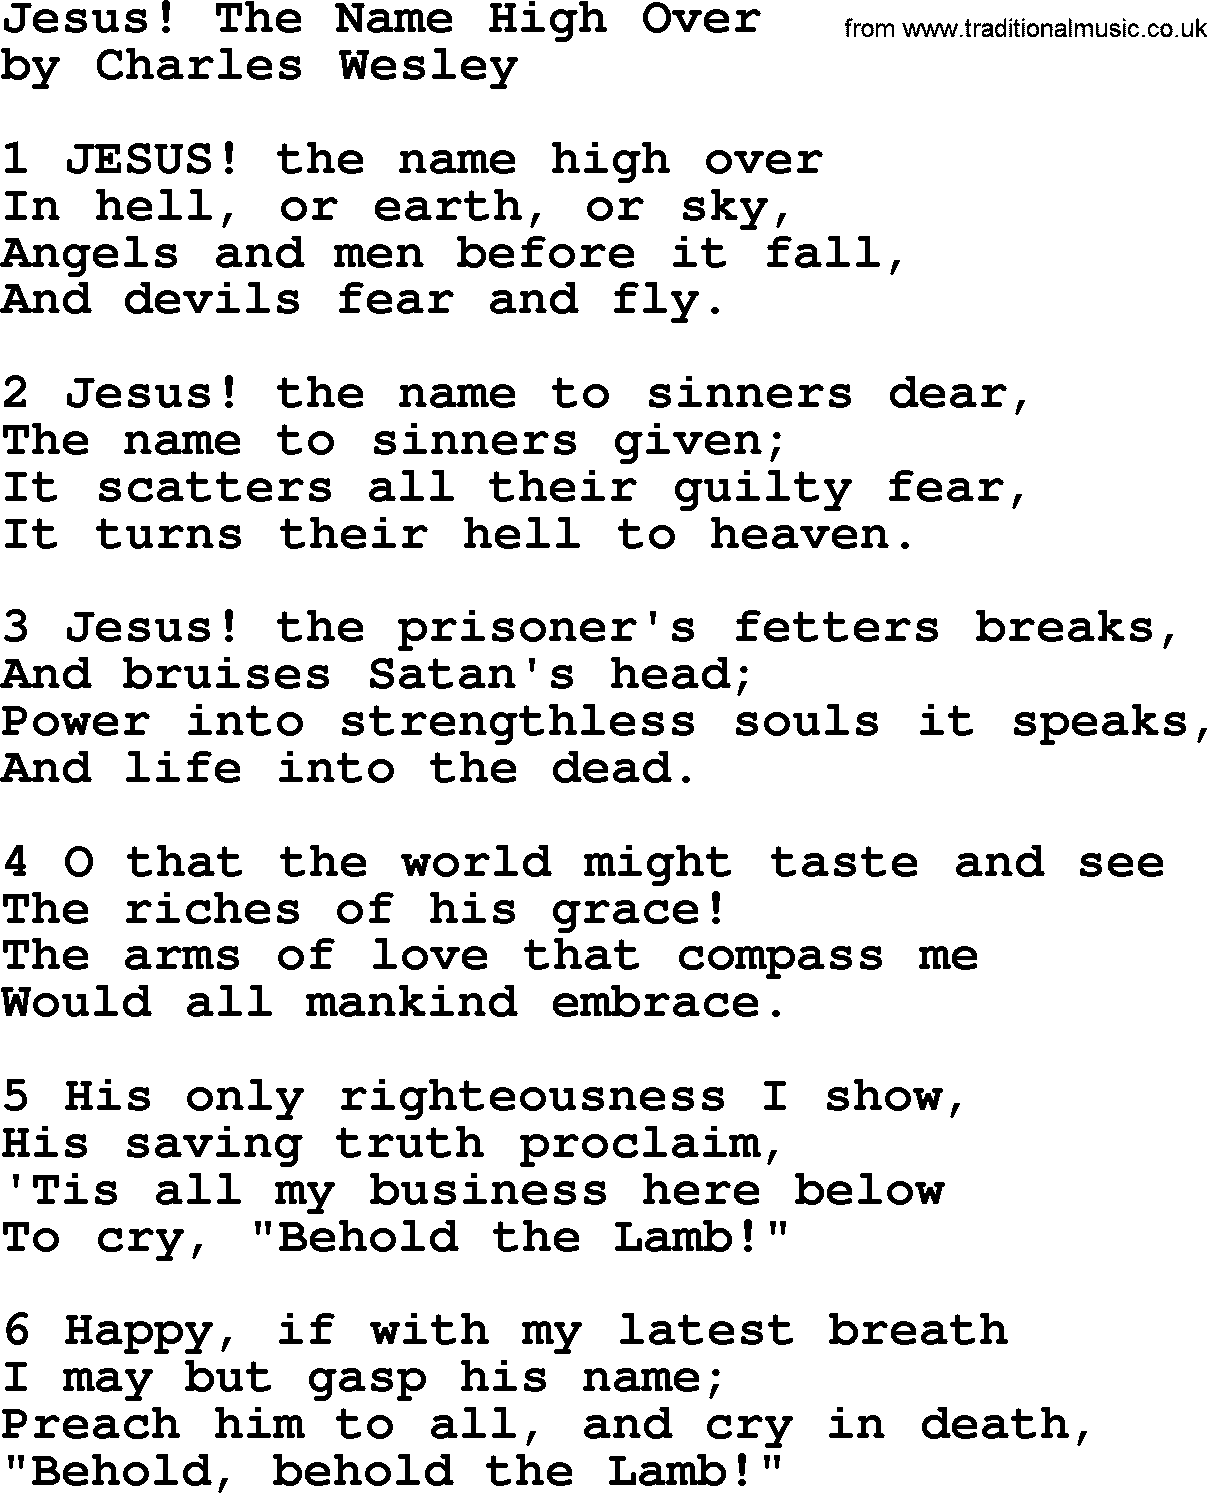 Charles Wesley hymn: Jesus! The Name High Over, lyrics